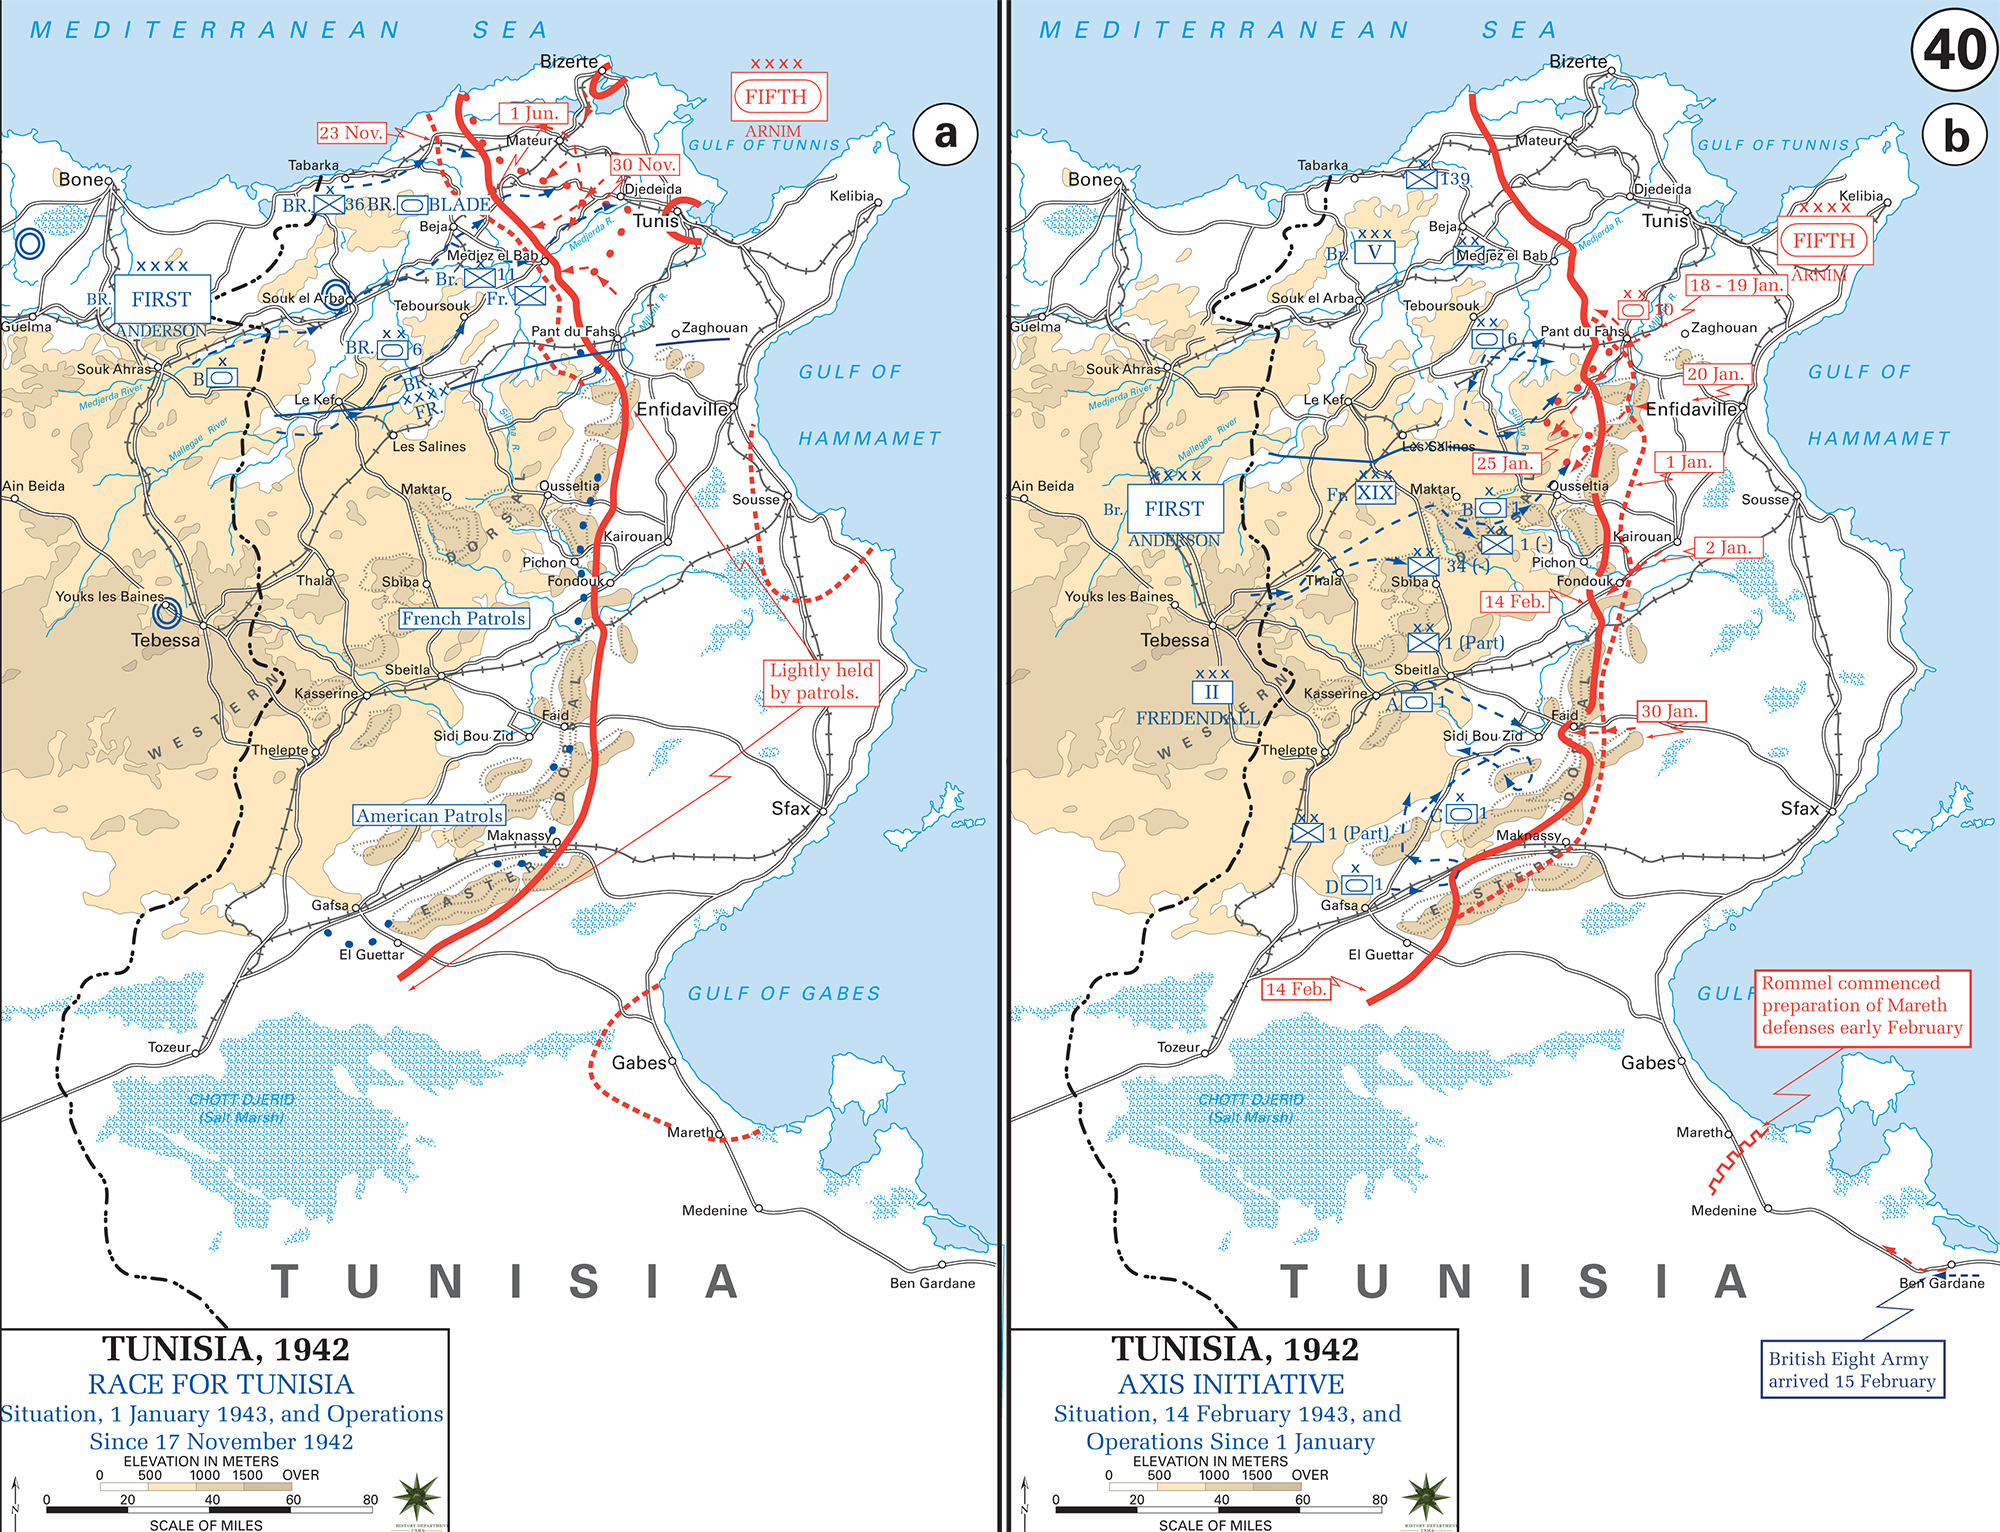 Map of WWII Tunisia 1942/43, Race for Tunis November 17, 1942 - January 1, 1943; Axis Initiative January 1, 1943 - February 14, 1943